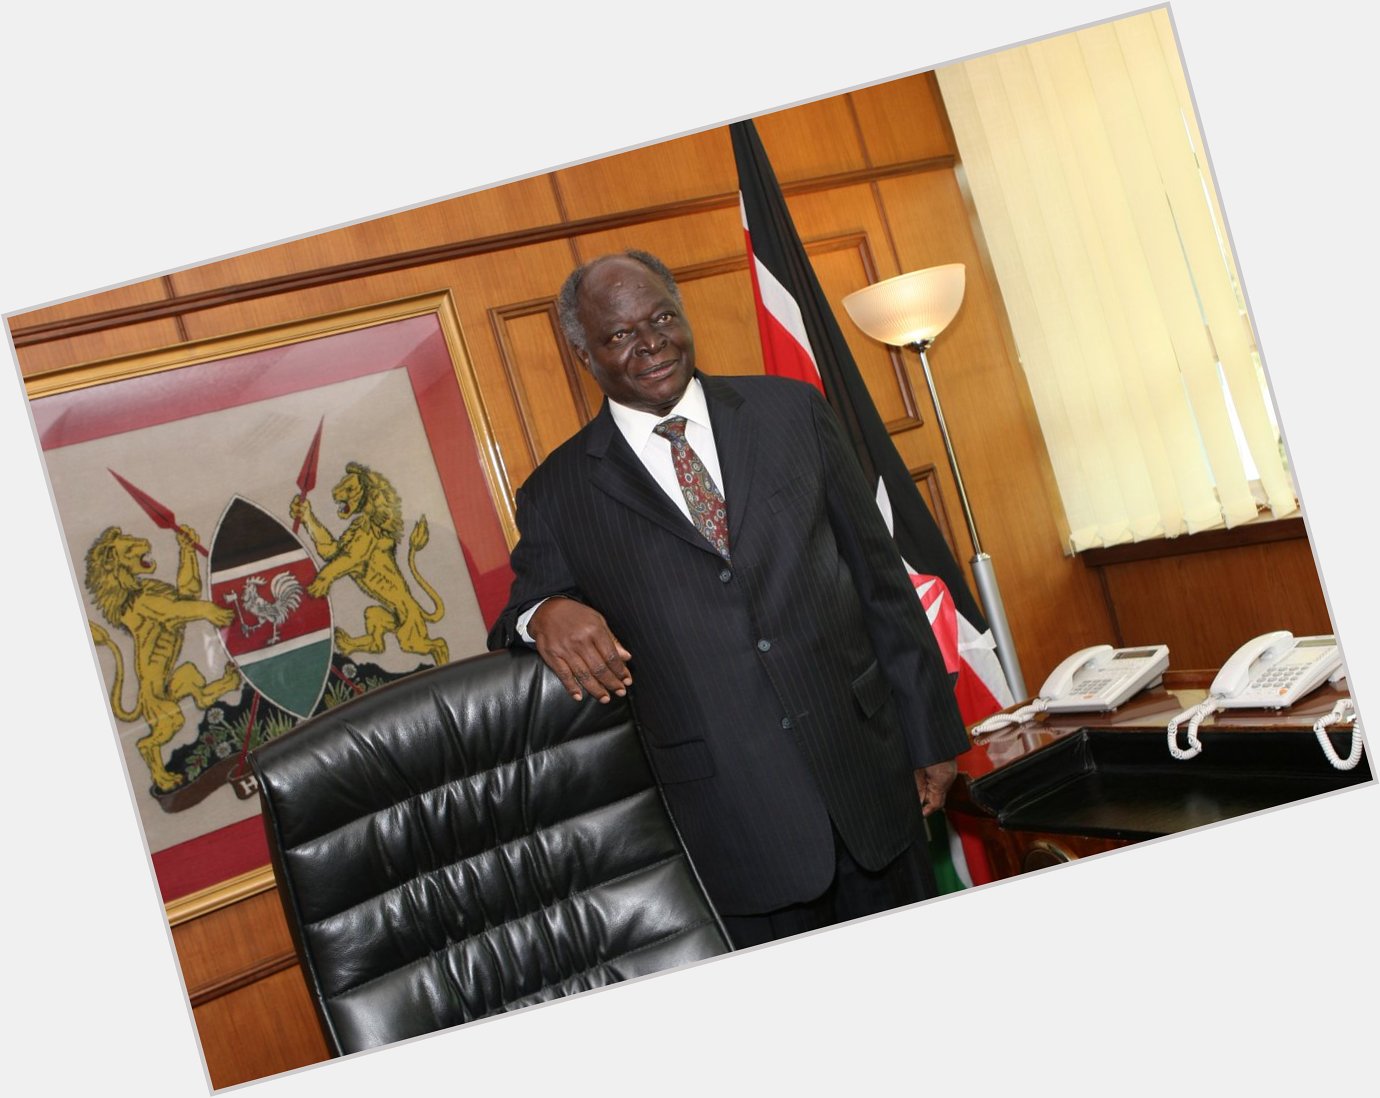 Happy birthday to you. Your Excellency former President of Kenya
Mwai Kibaki 